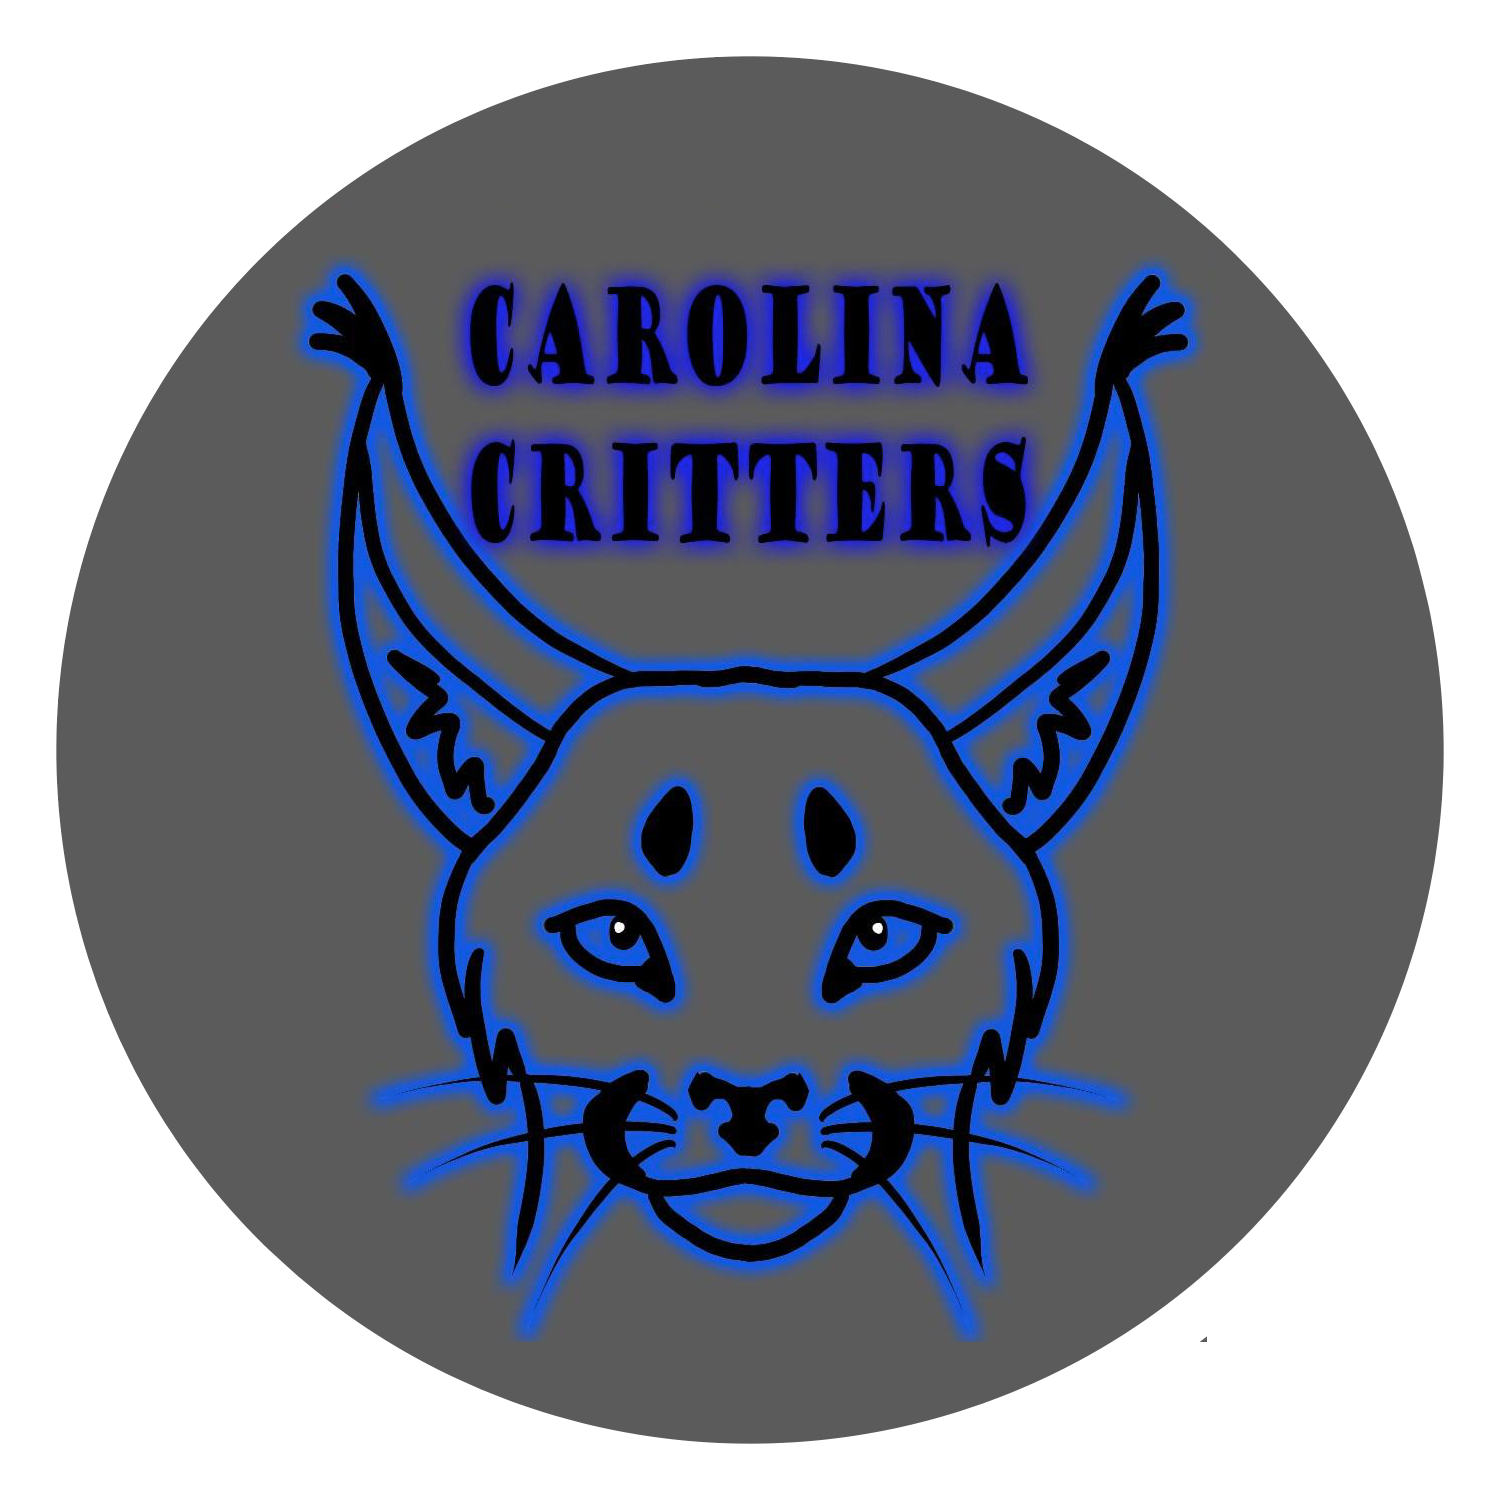 Carolina Criters Fursuits home page